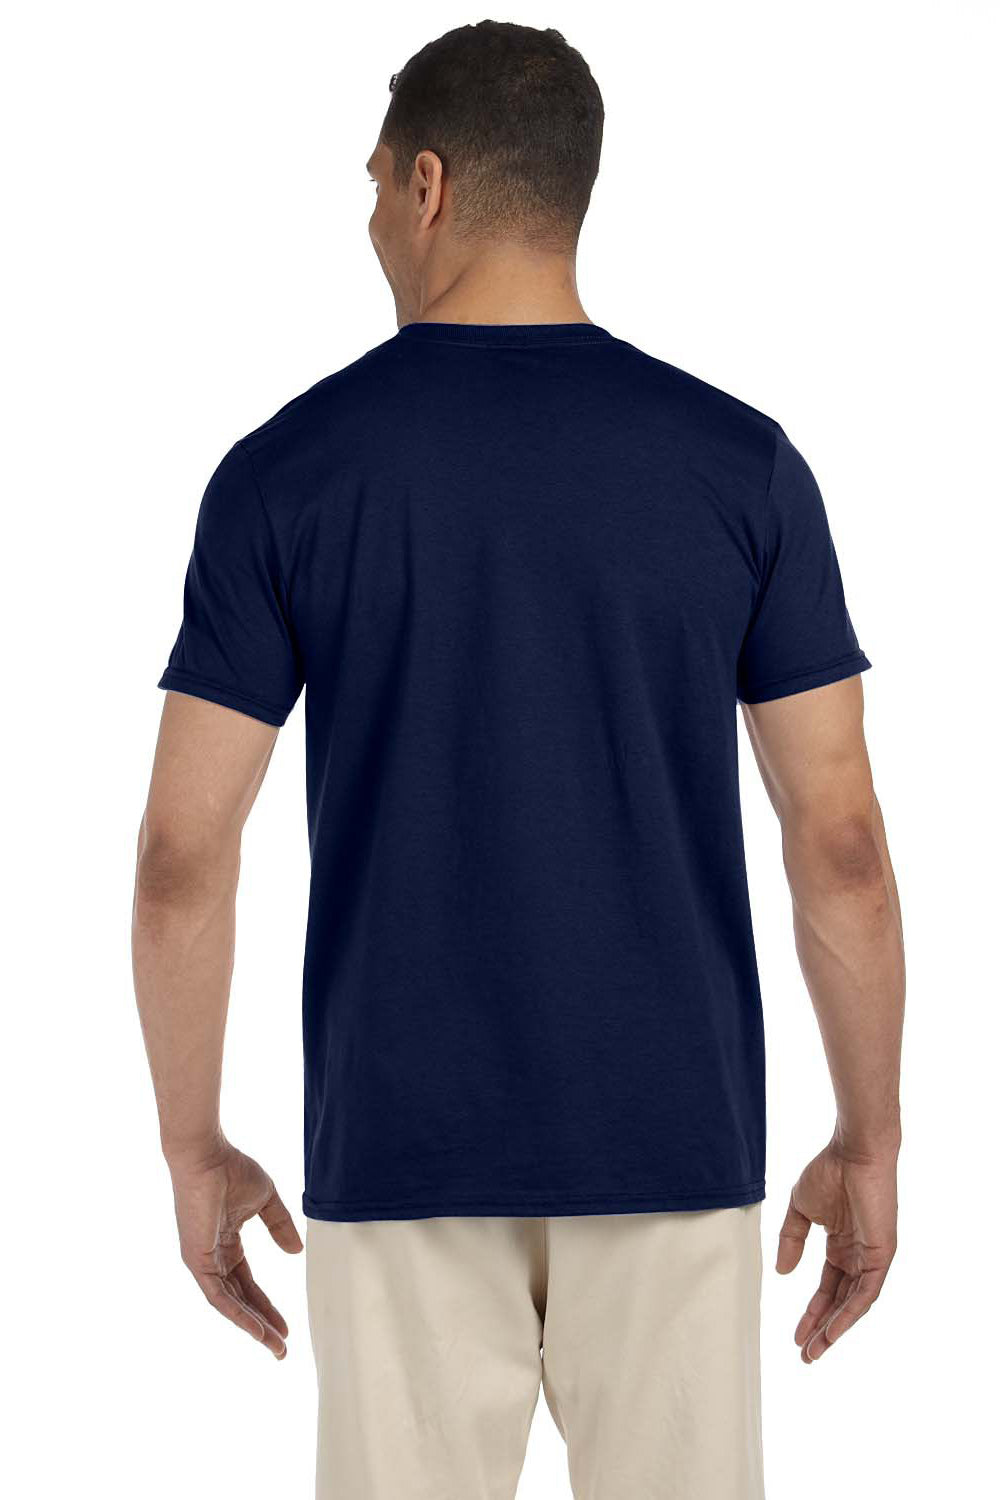 Gildan G640 Mens Softstyle Short Sleeve Crewneck T-Shirt Navy Blue Back